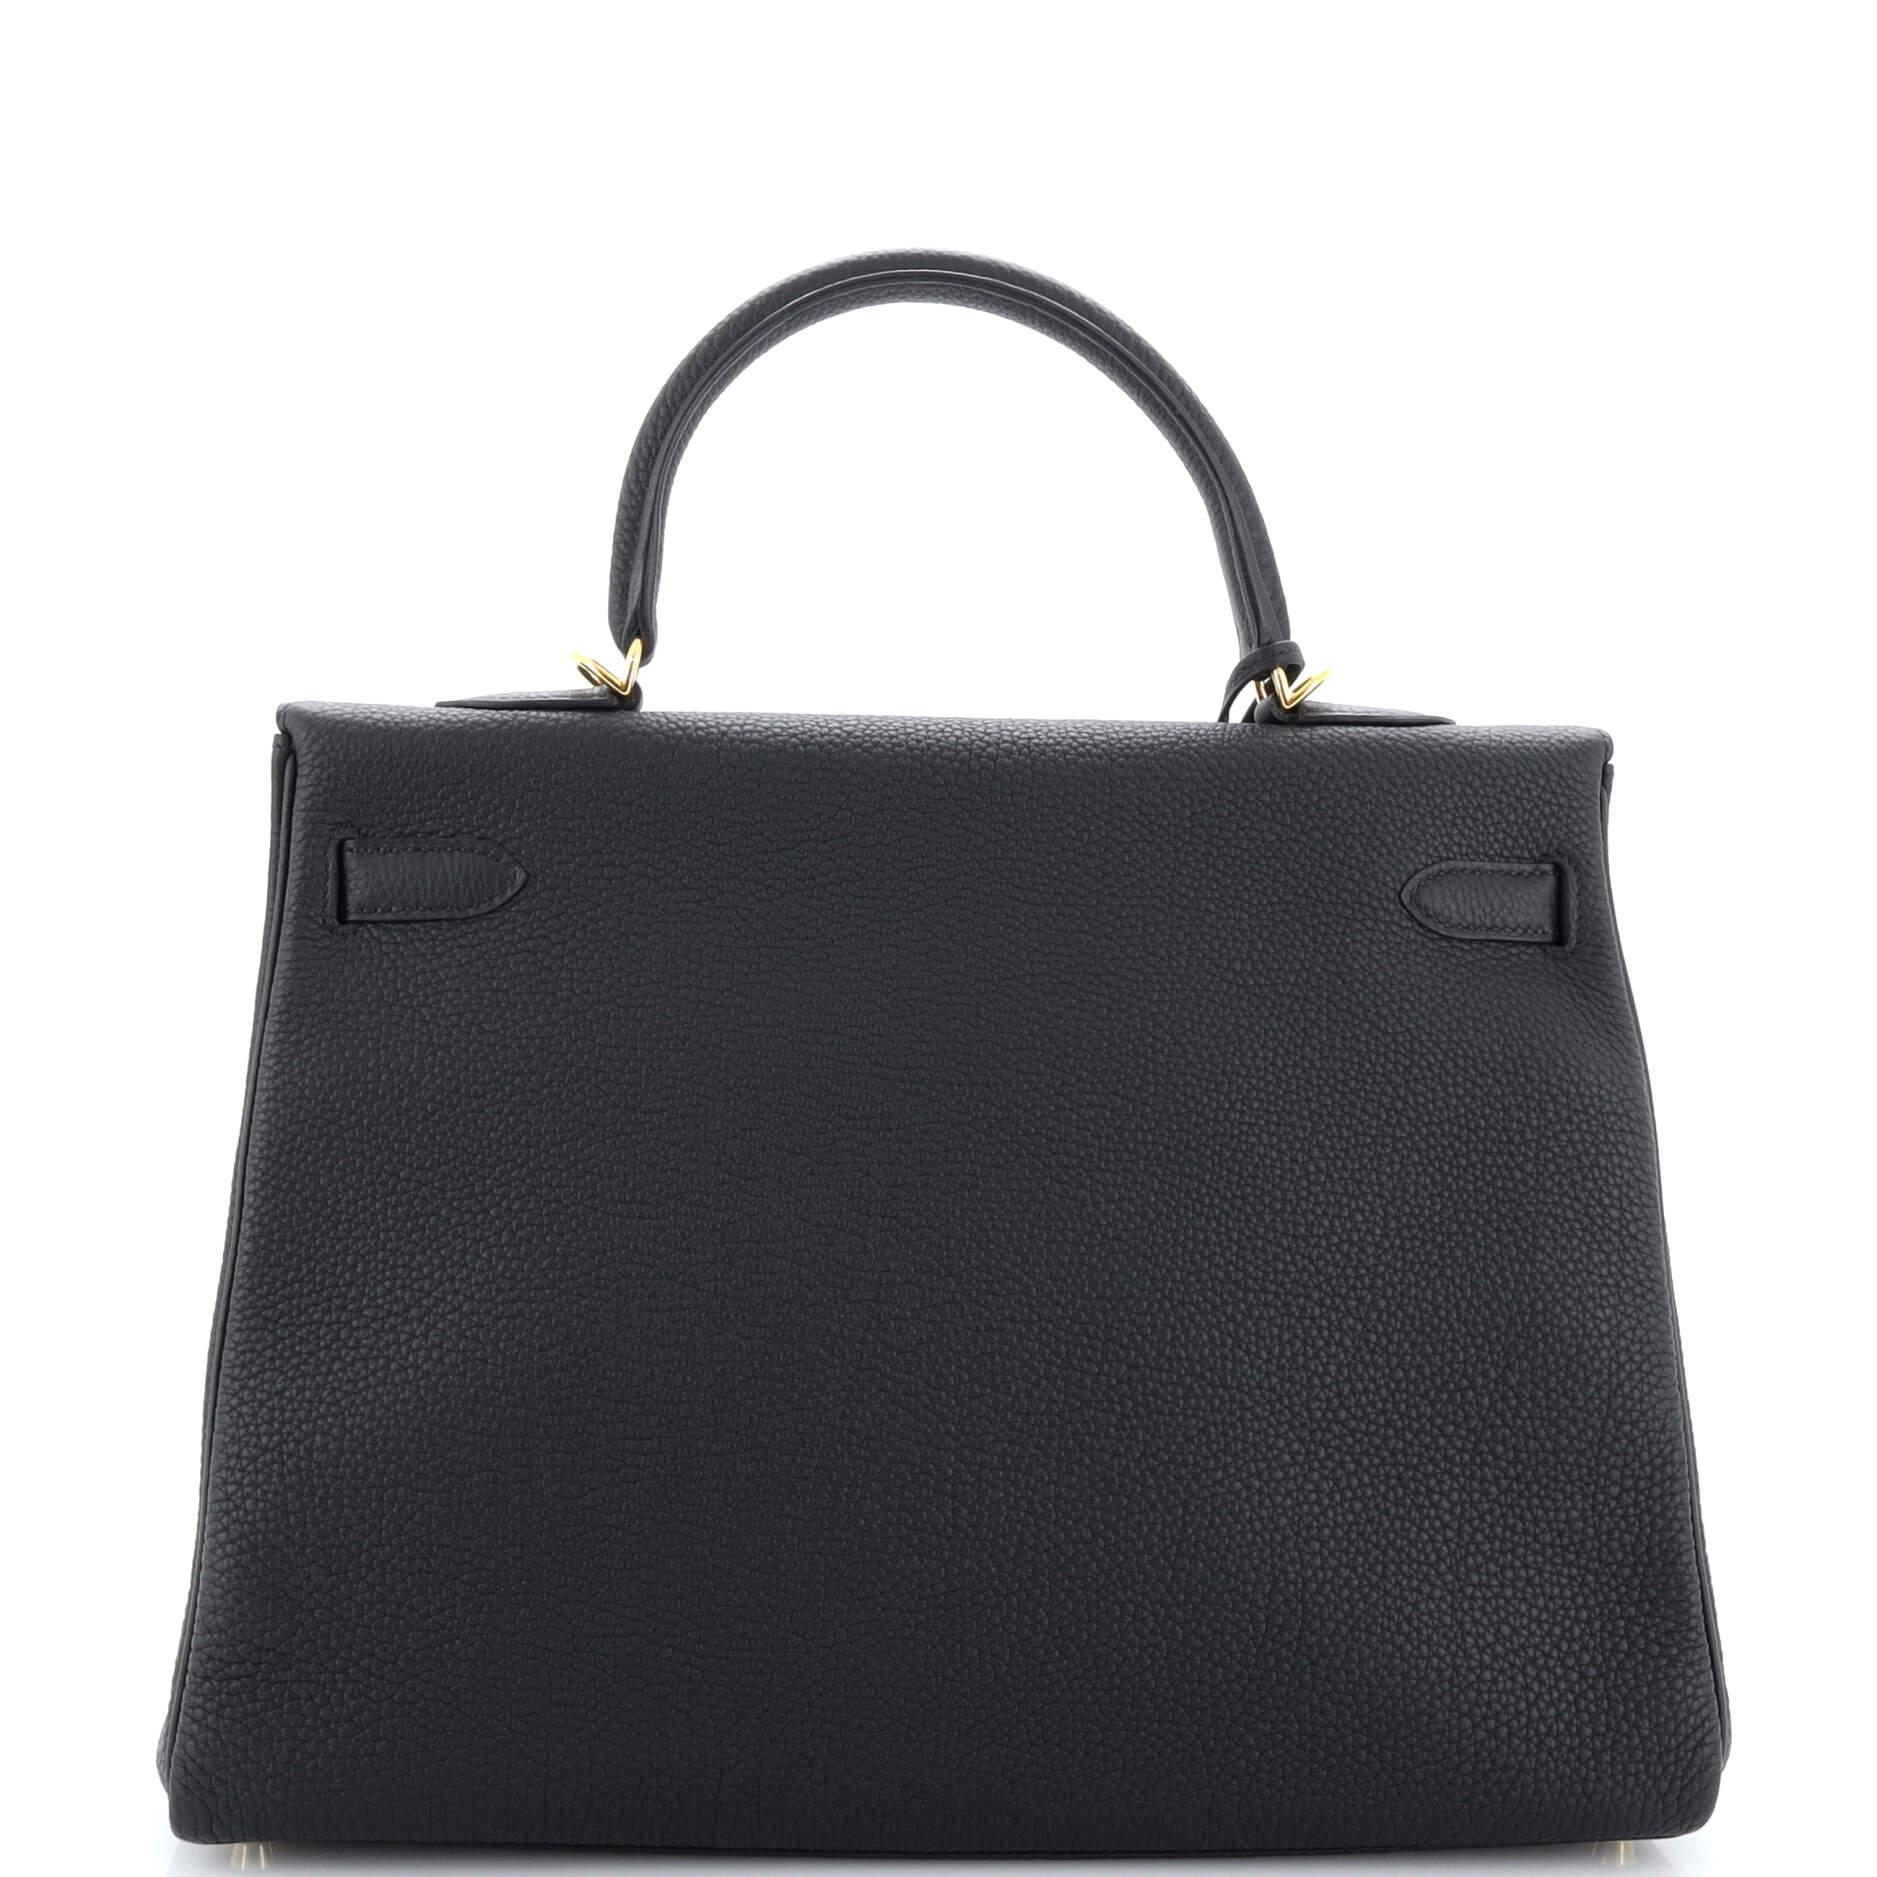 Women's Hermes Kelly Handbag Noir Togo with Gold Hardware 35